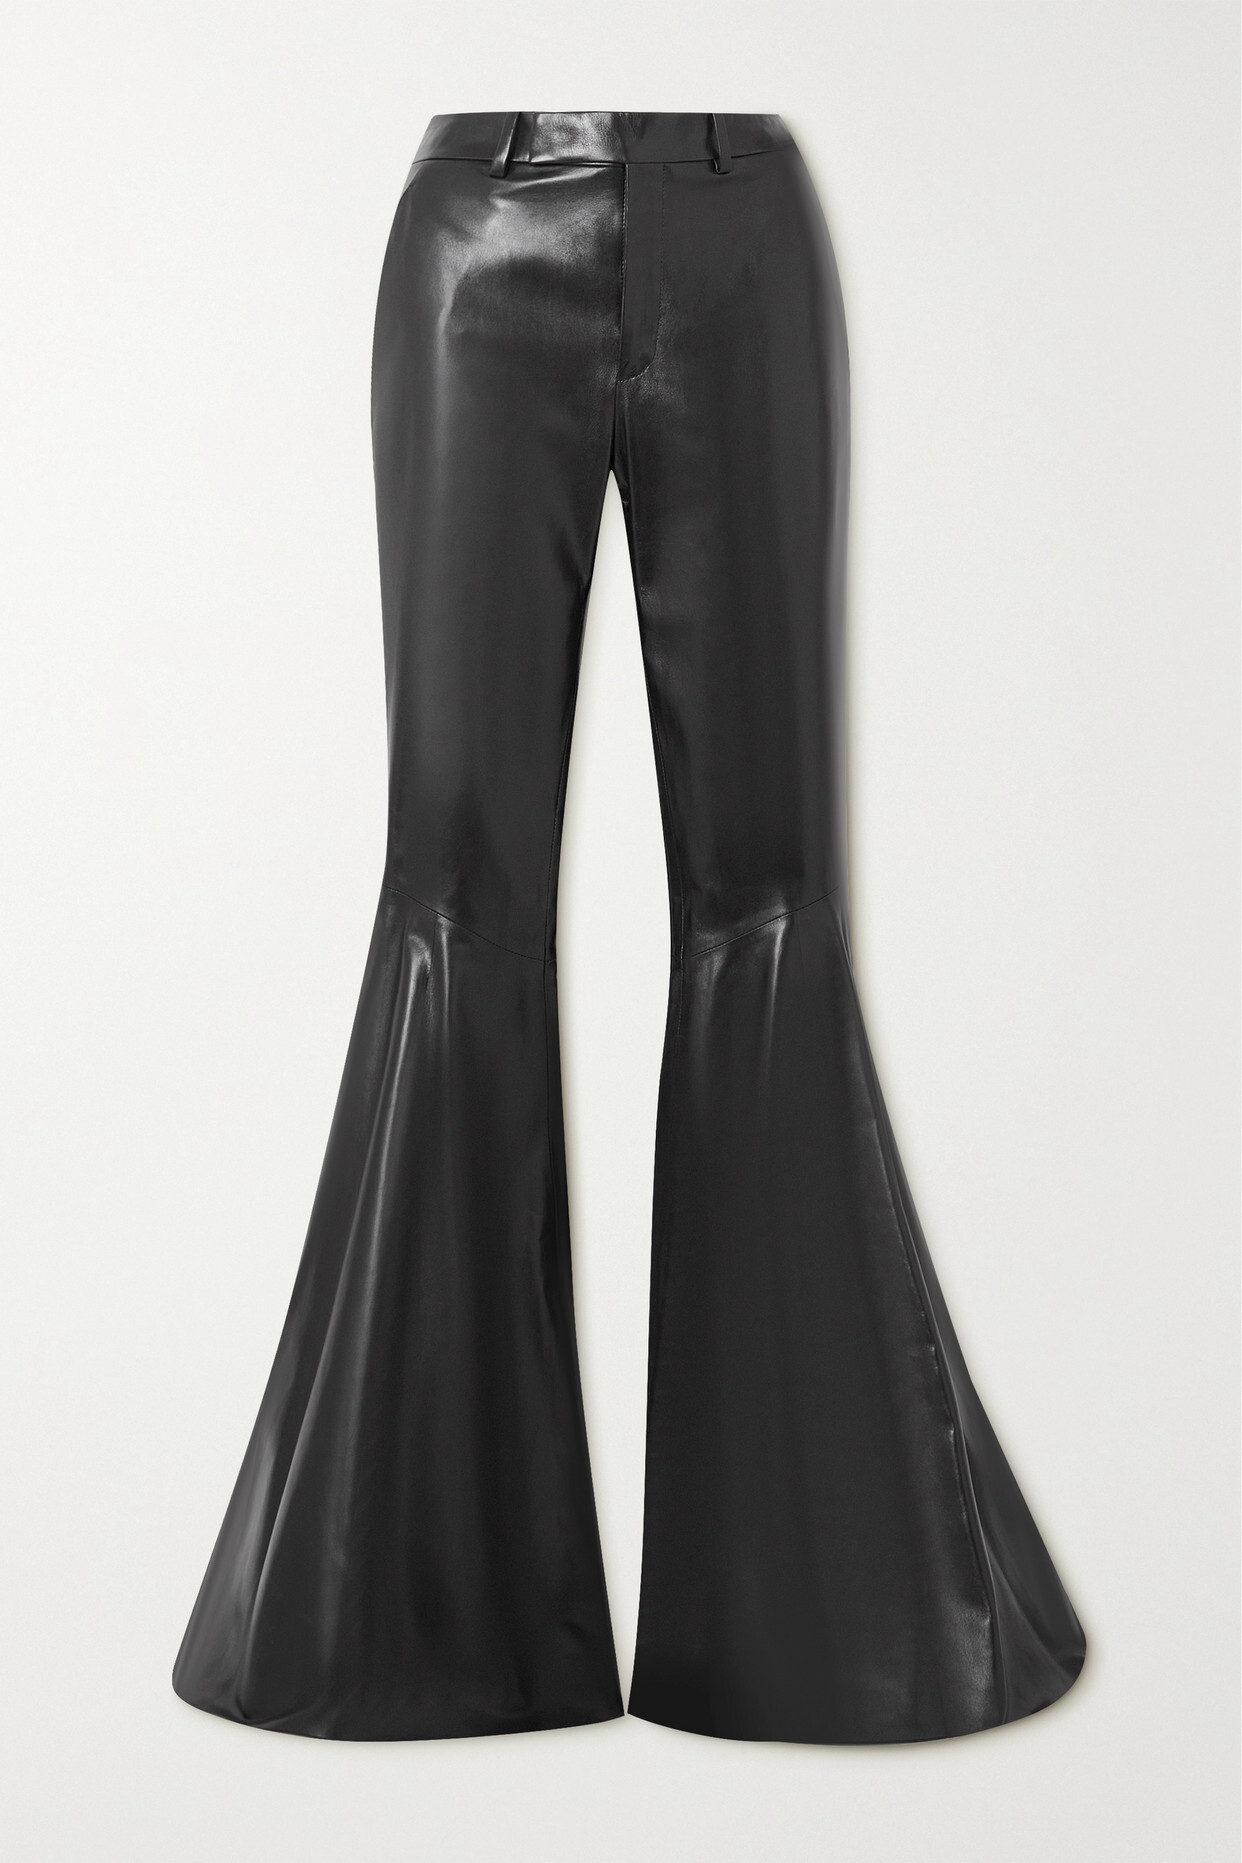 SAINT LAURENT - Leather Flared Pants - Black